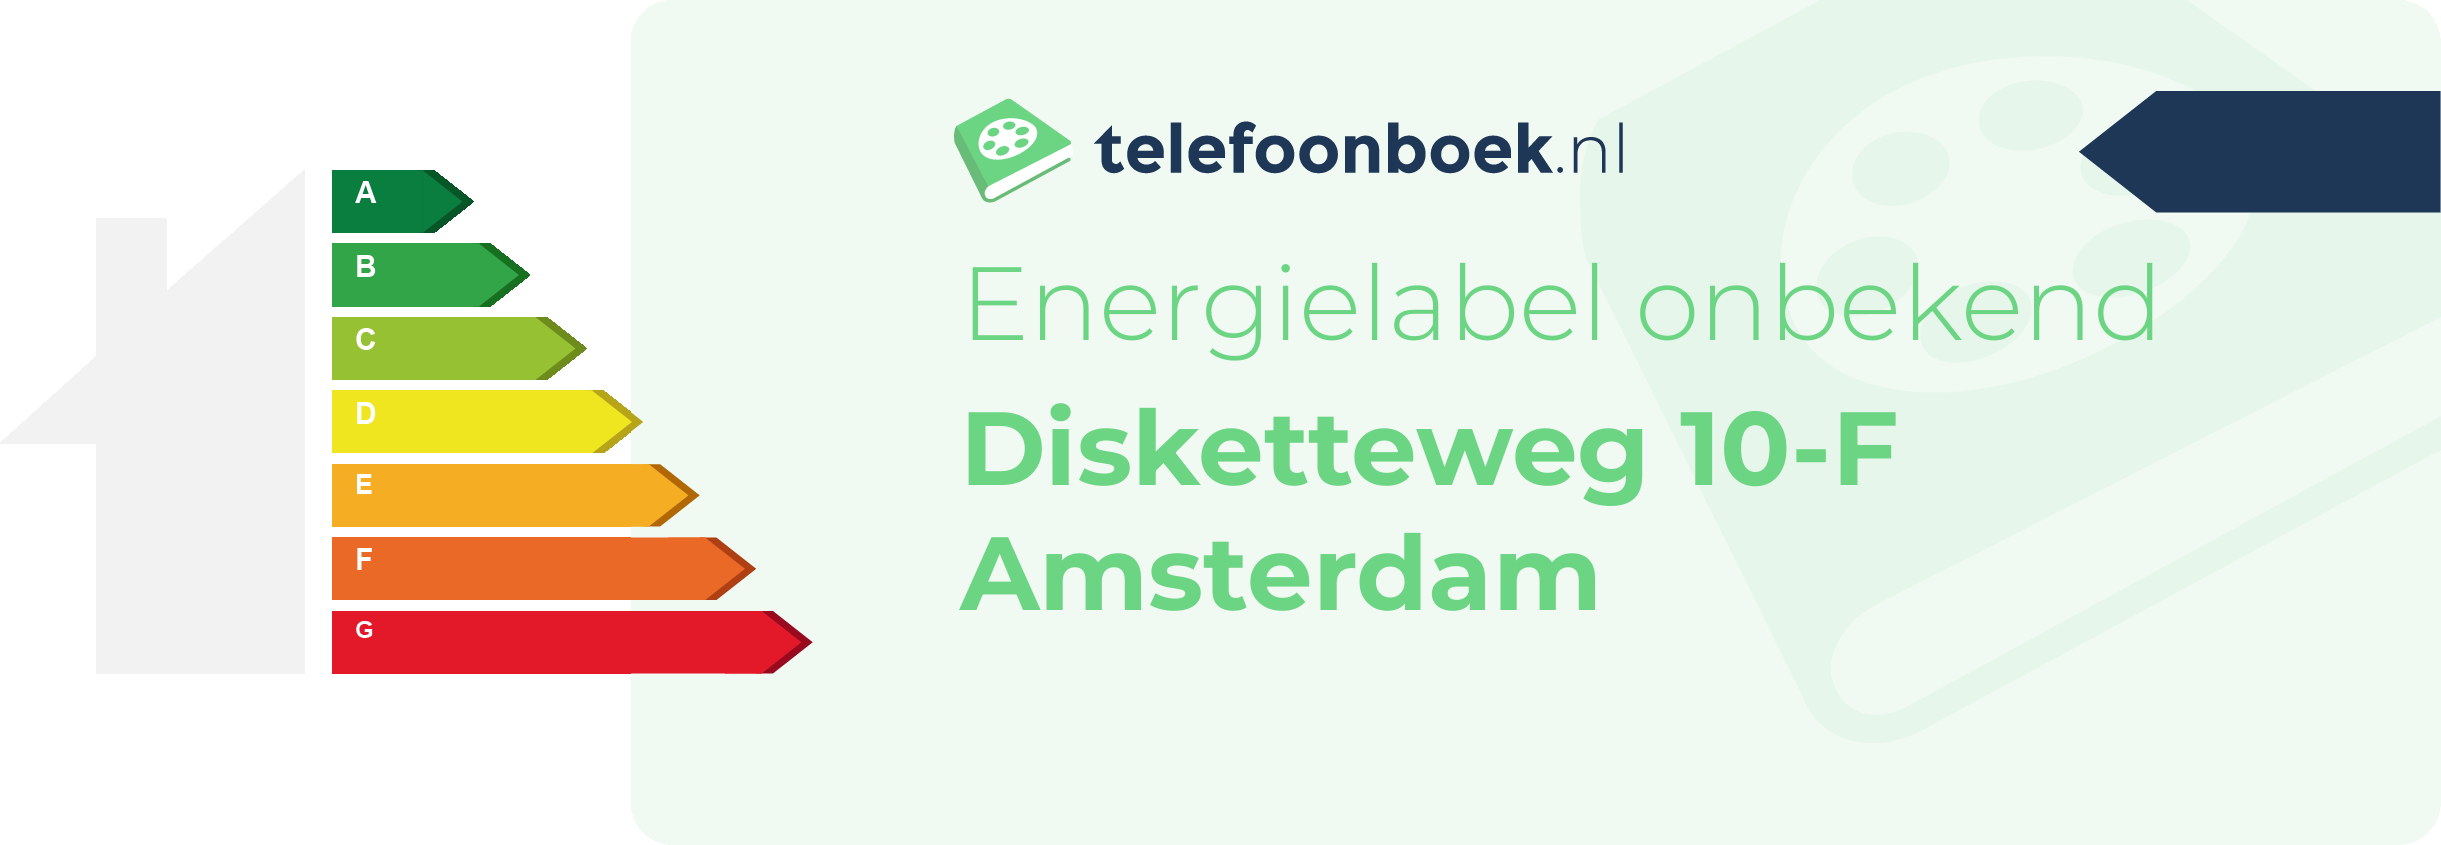 Energielabel Disketteweg 10-F Amsterdam